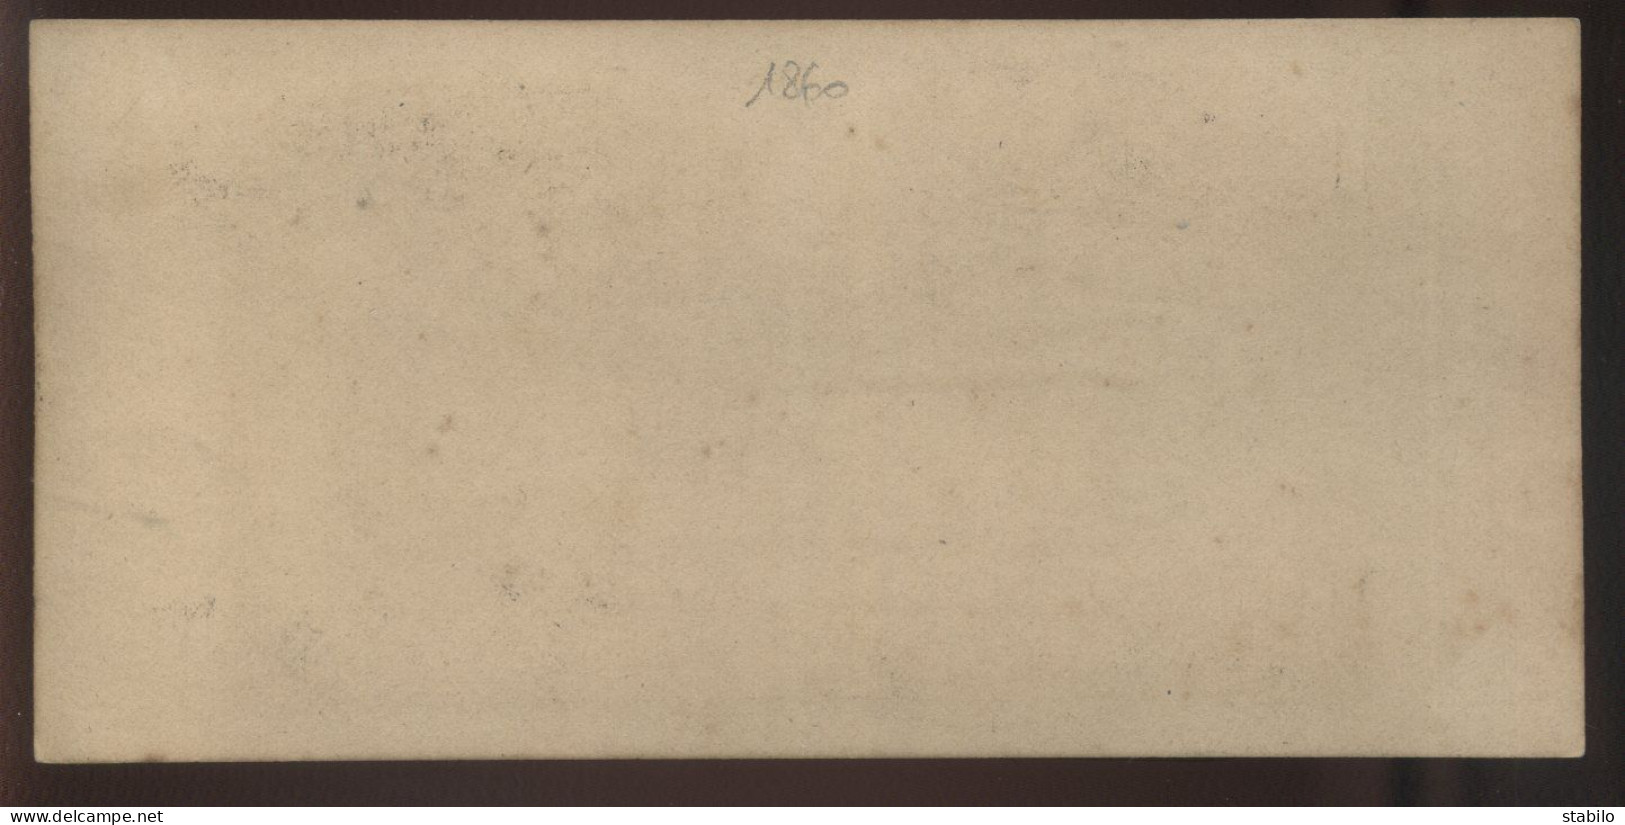 PHOTO STEREO - CABINET DE MUSIQUE EN 1860 - Stereoscopic